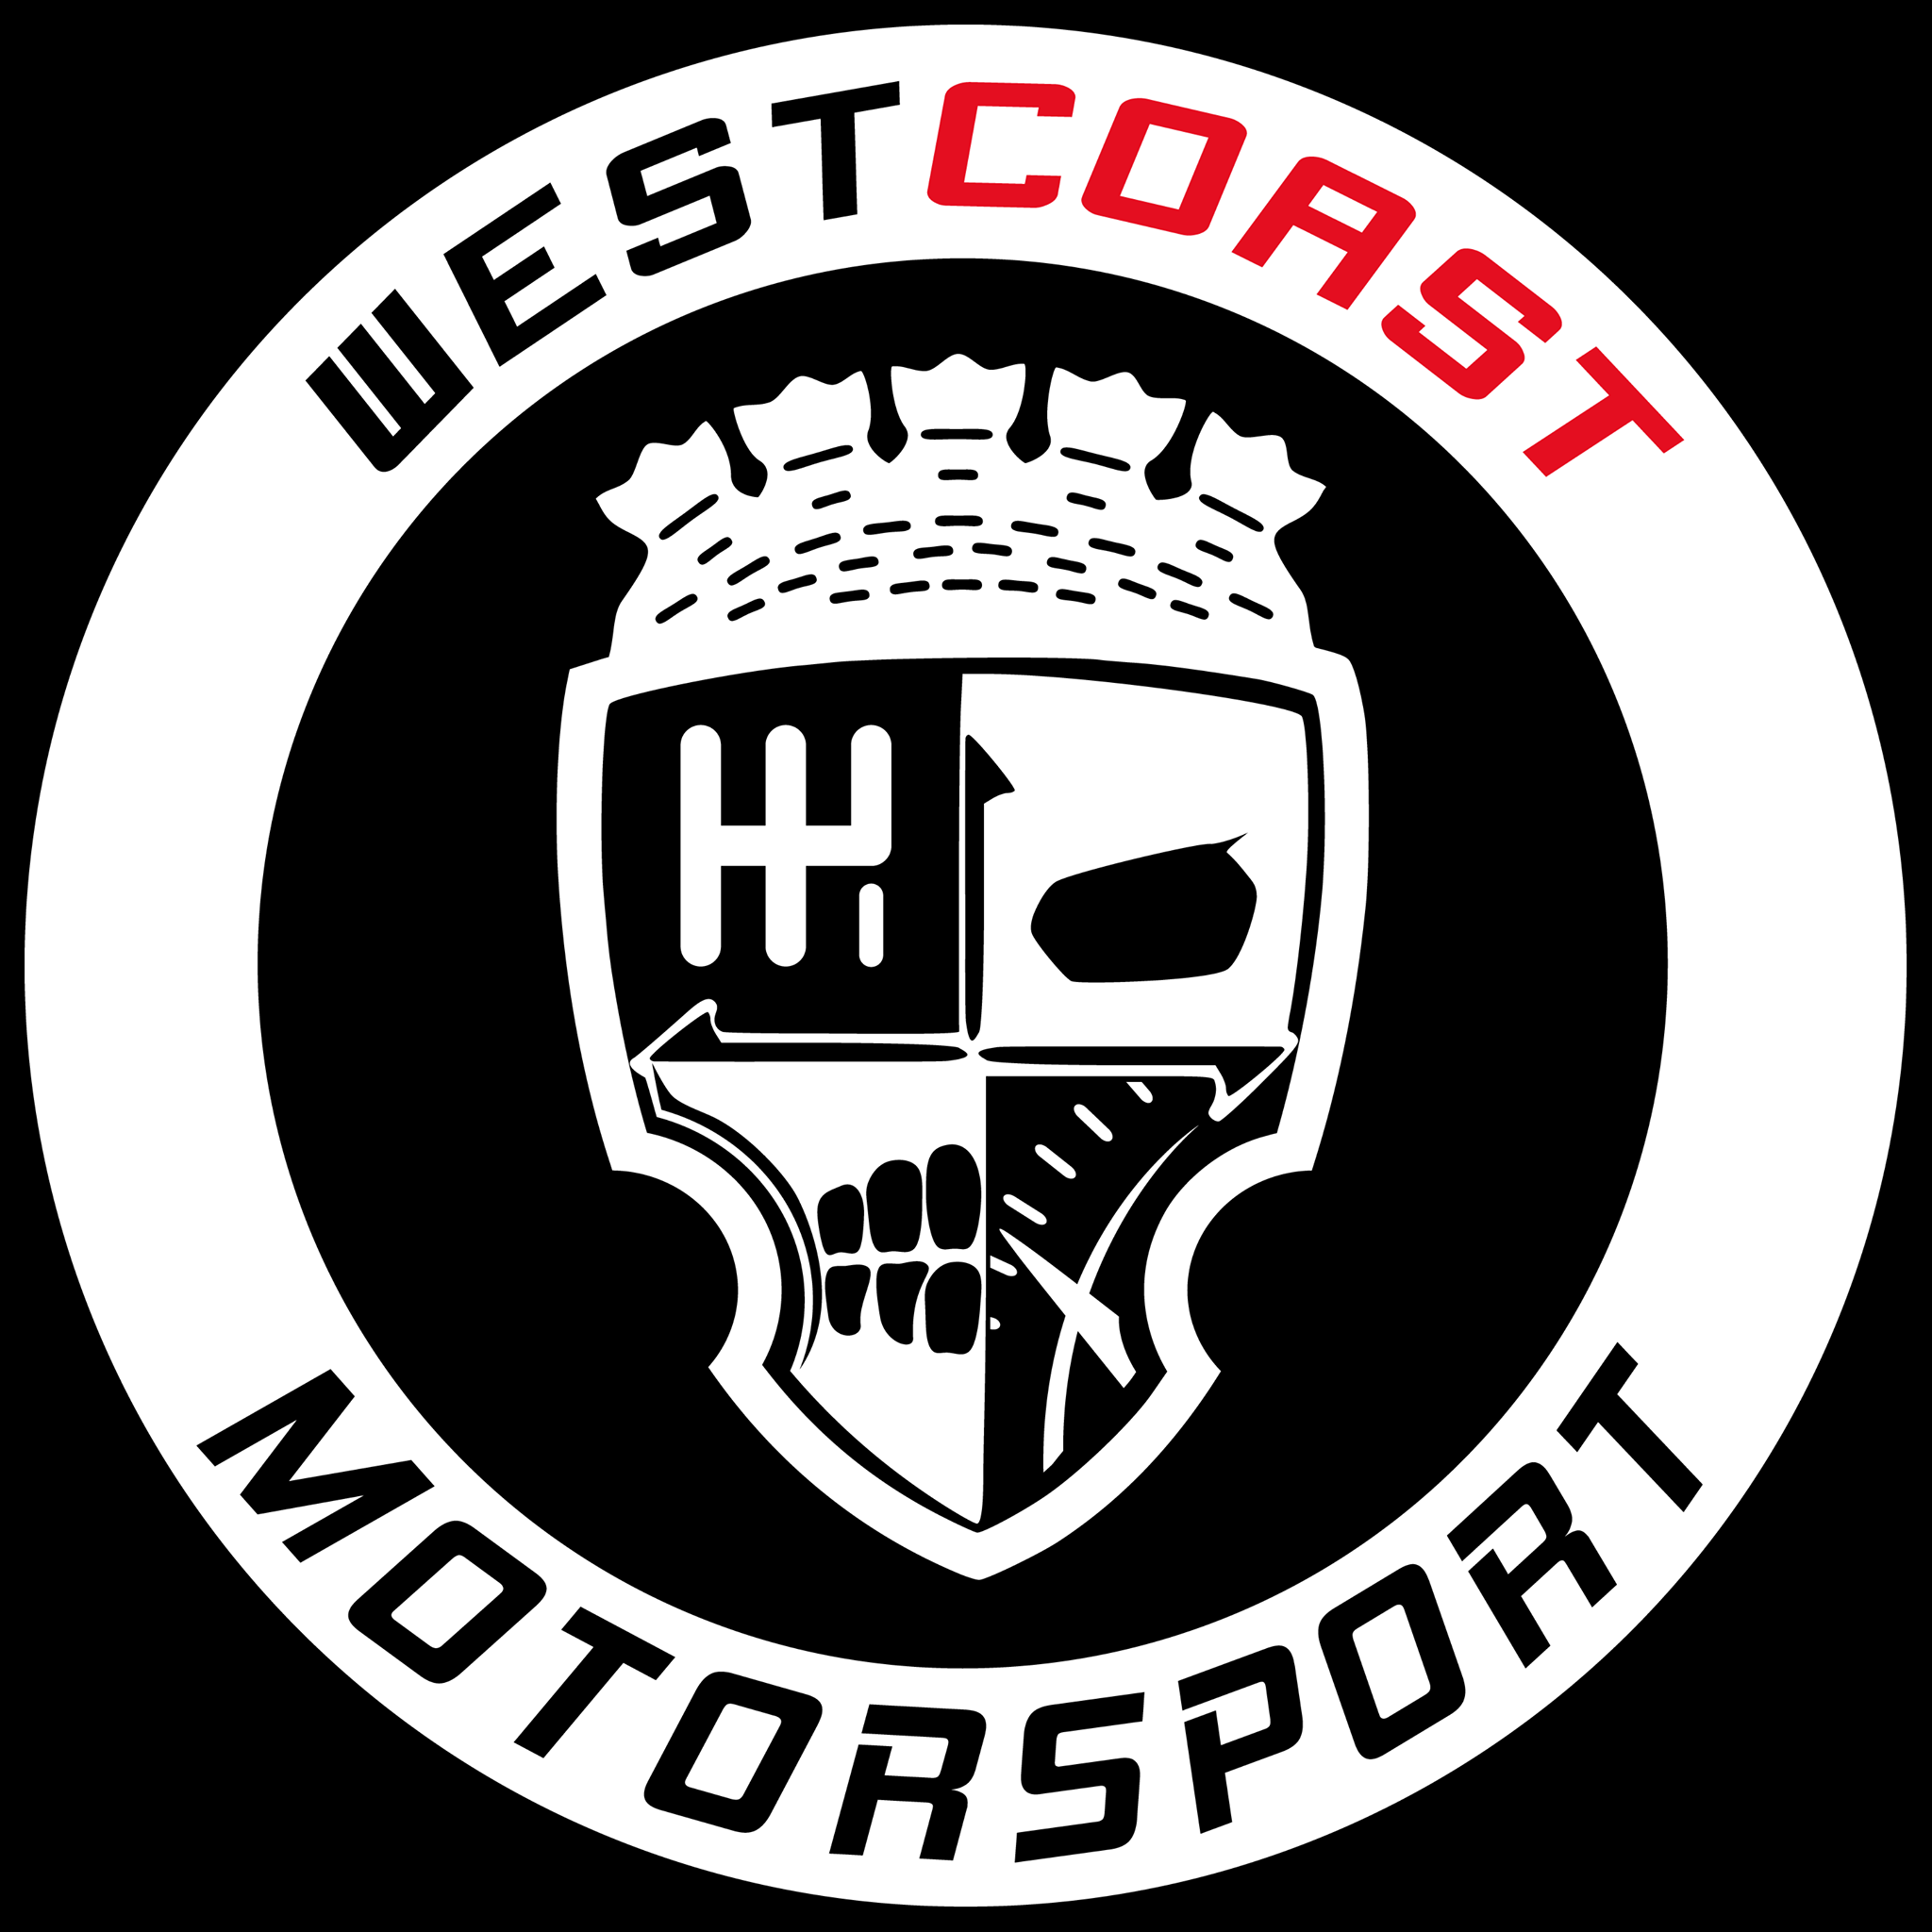 Westcoast Motorsport